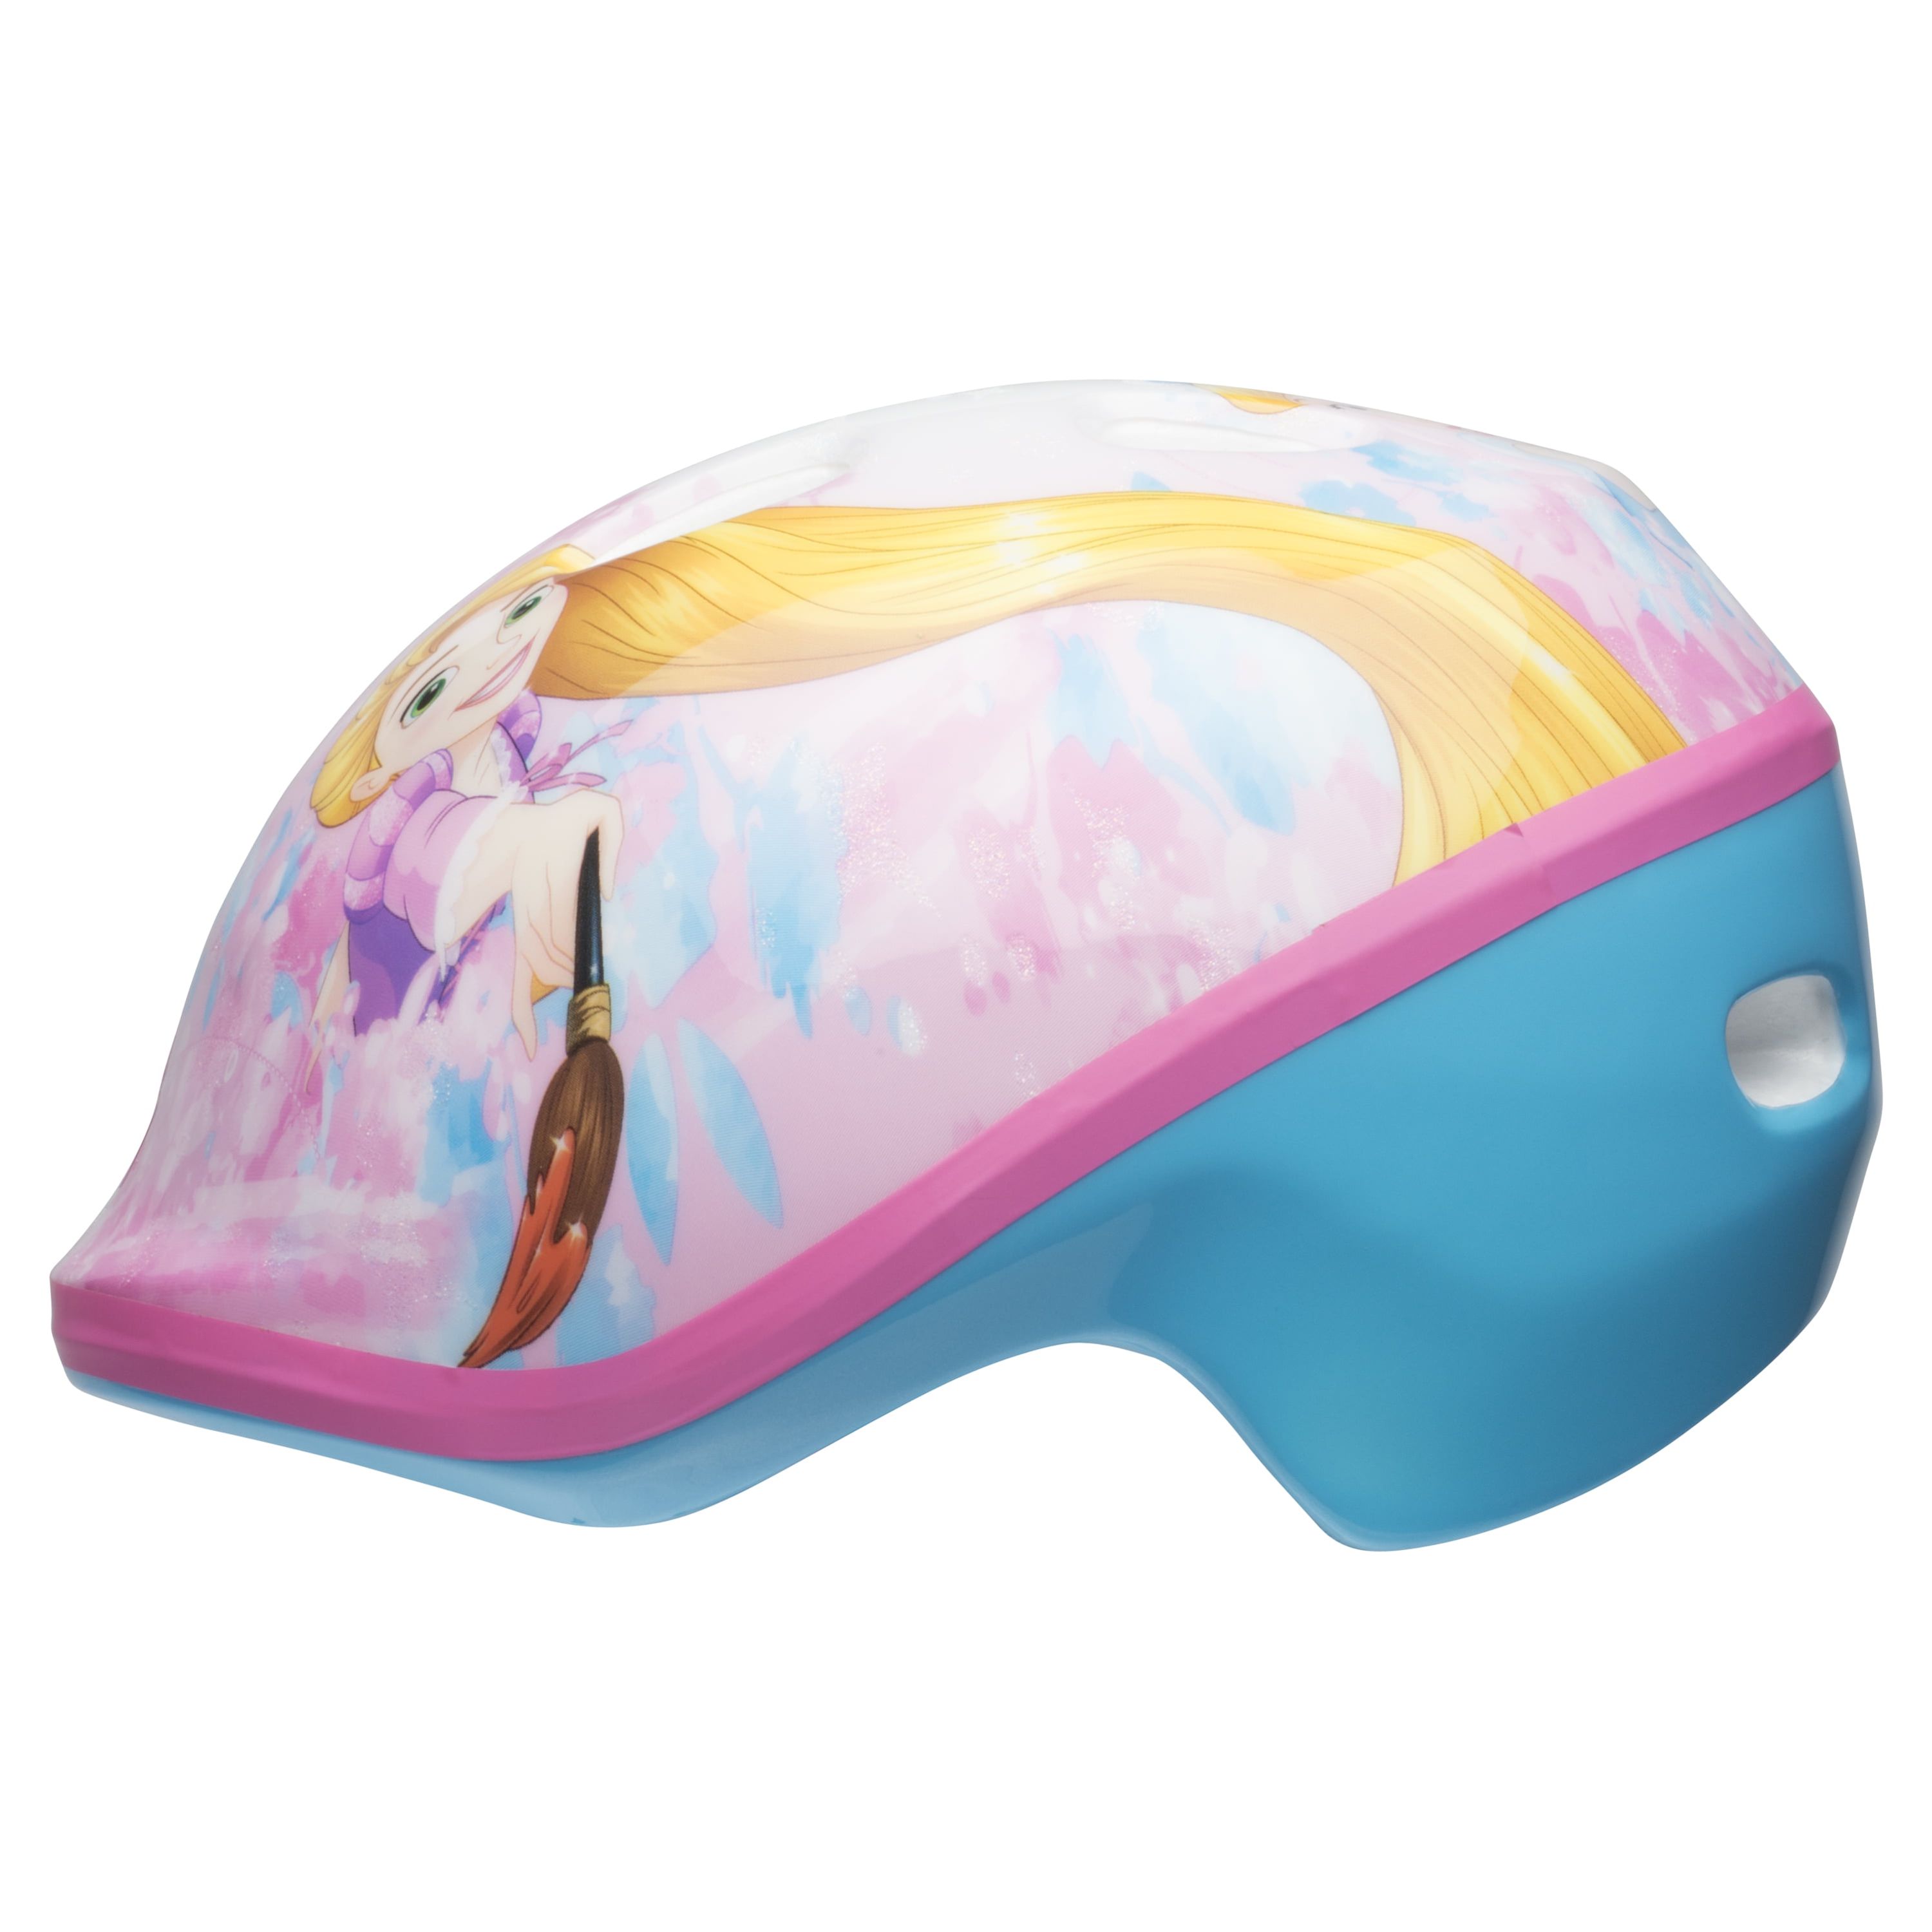 Disney Princesses Rule Glitter Bell Bike Helmet, Pink/Light Blue, Toddler 3+ (48-52cm) - image 4 of 8